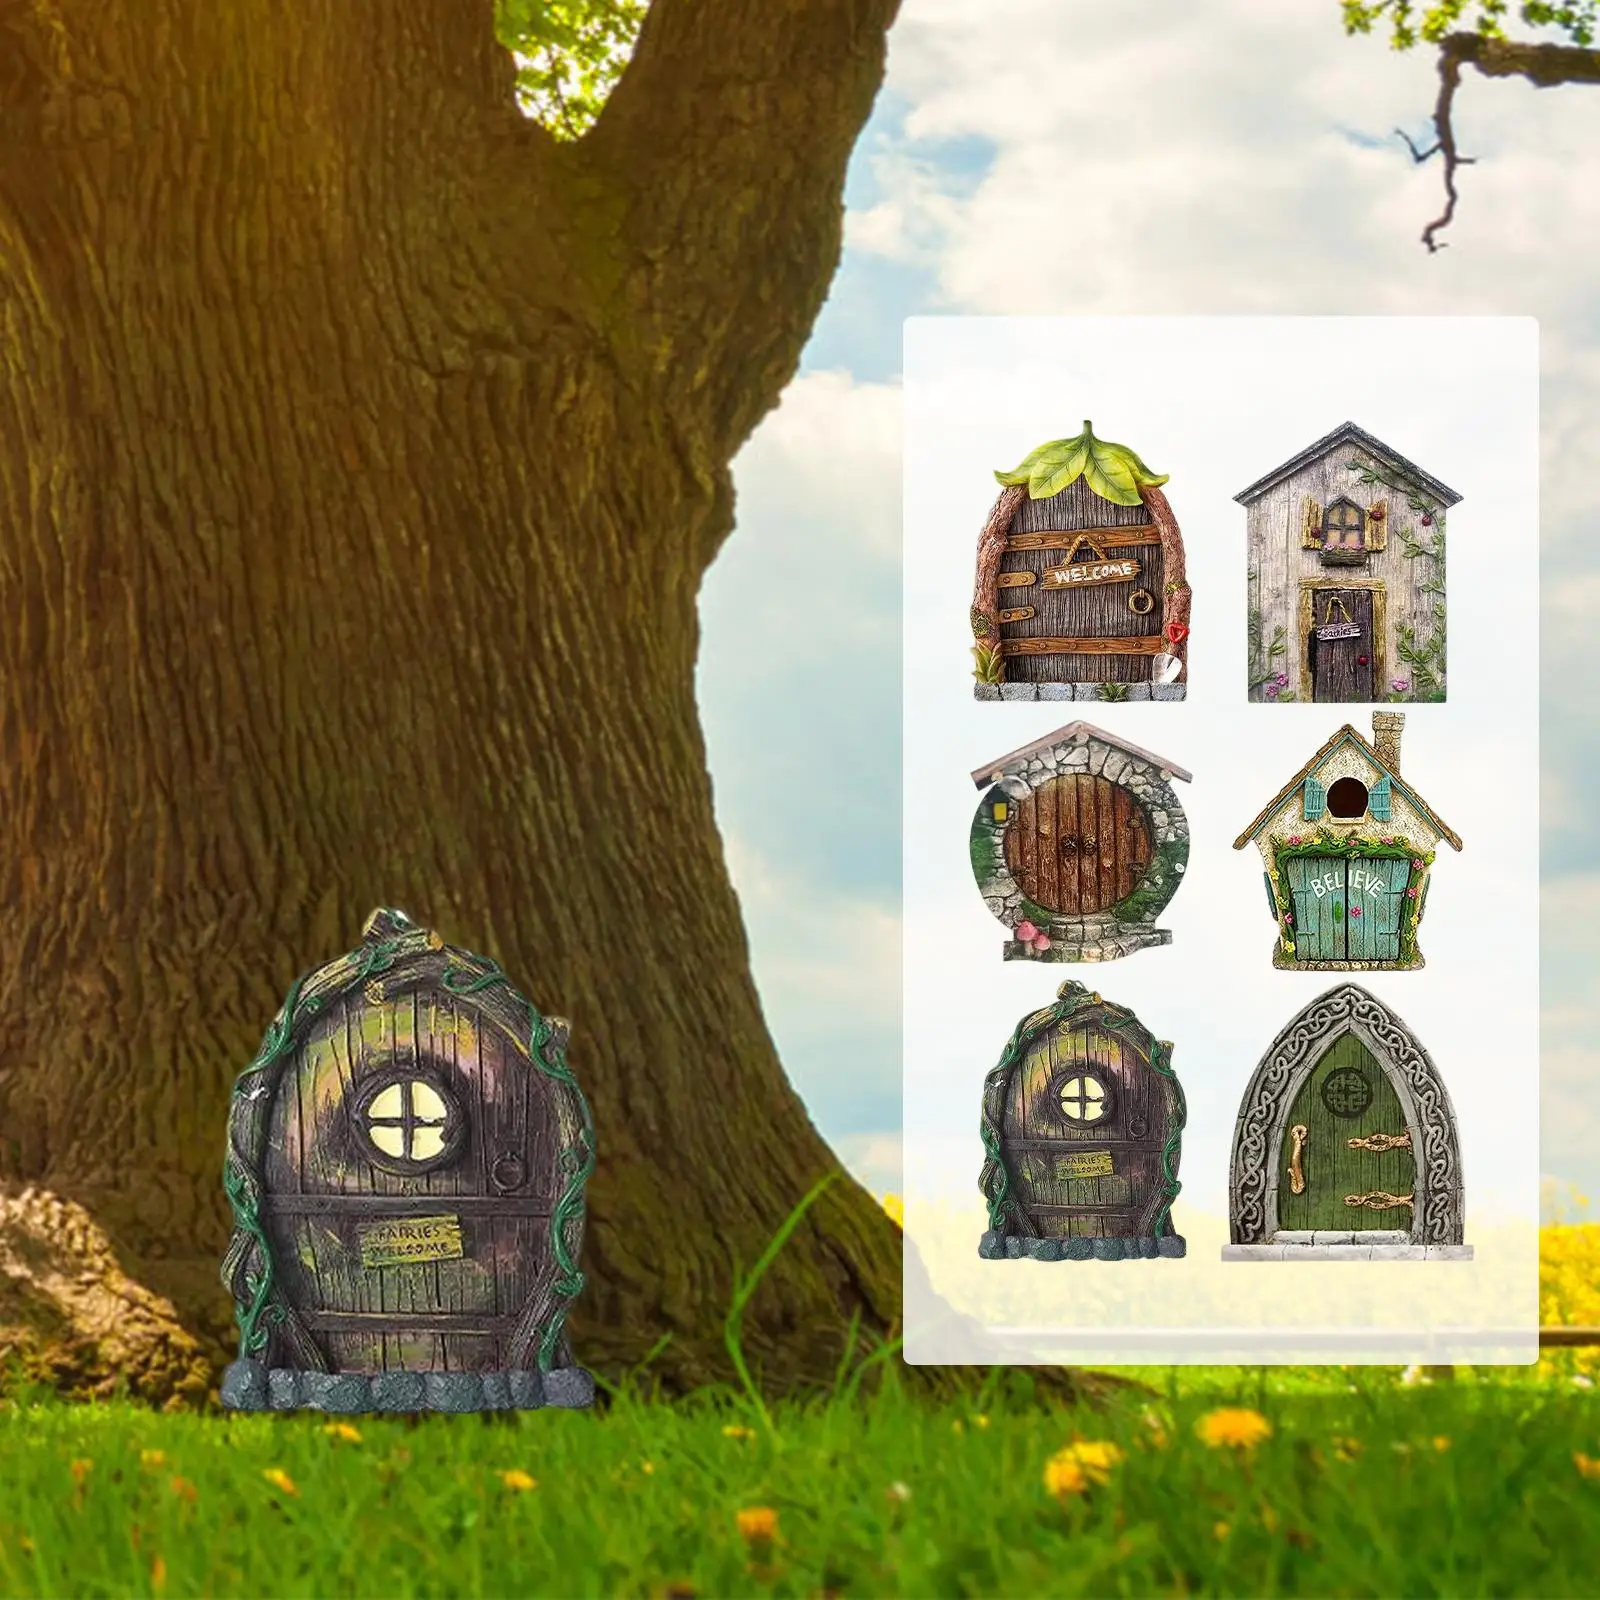 6 Pieces Fairy Tale Door Decoration Gifts DIY Accs for Fairy Garden Outdoor